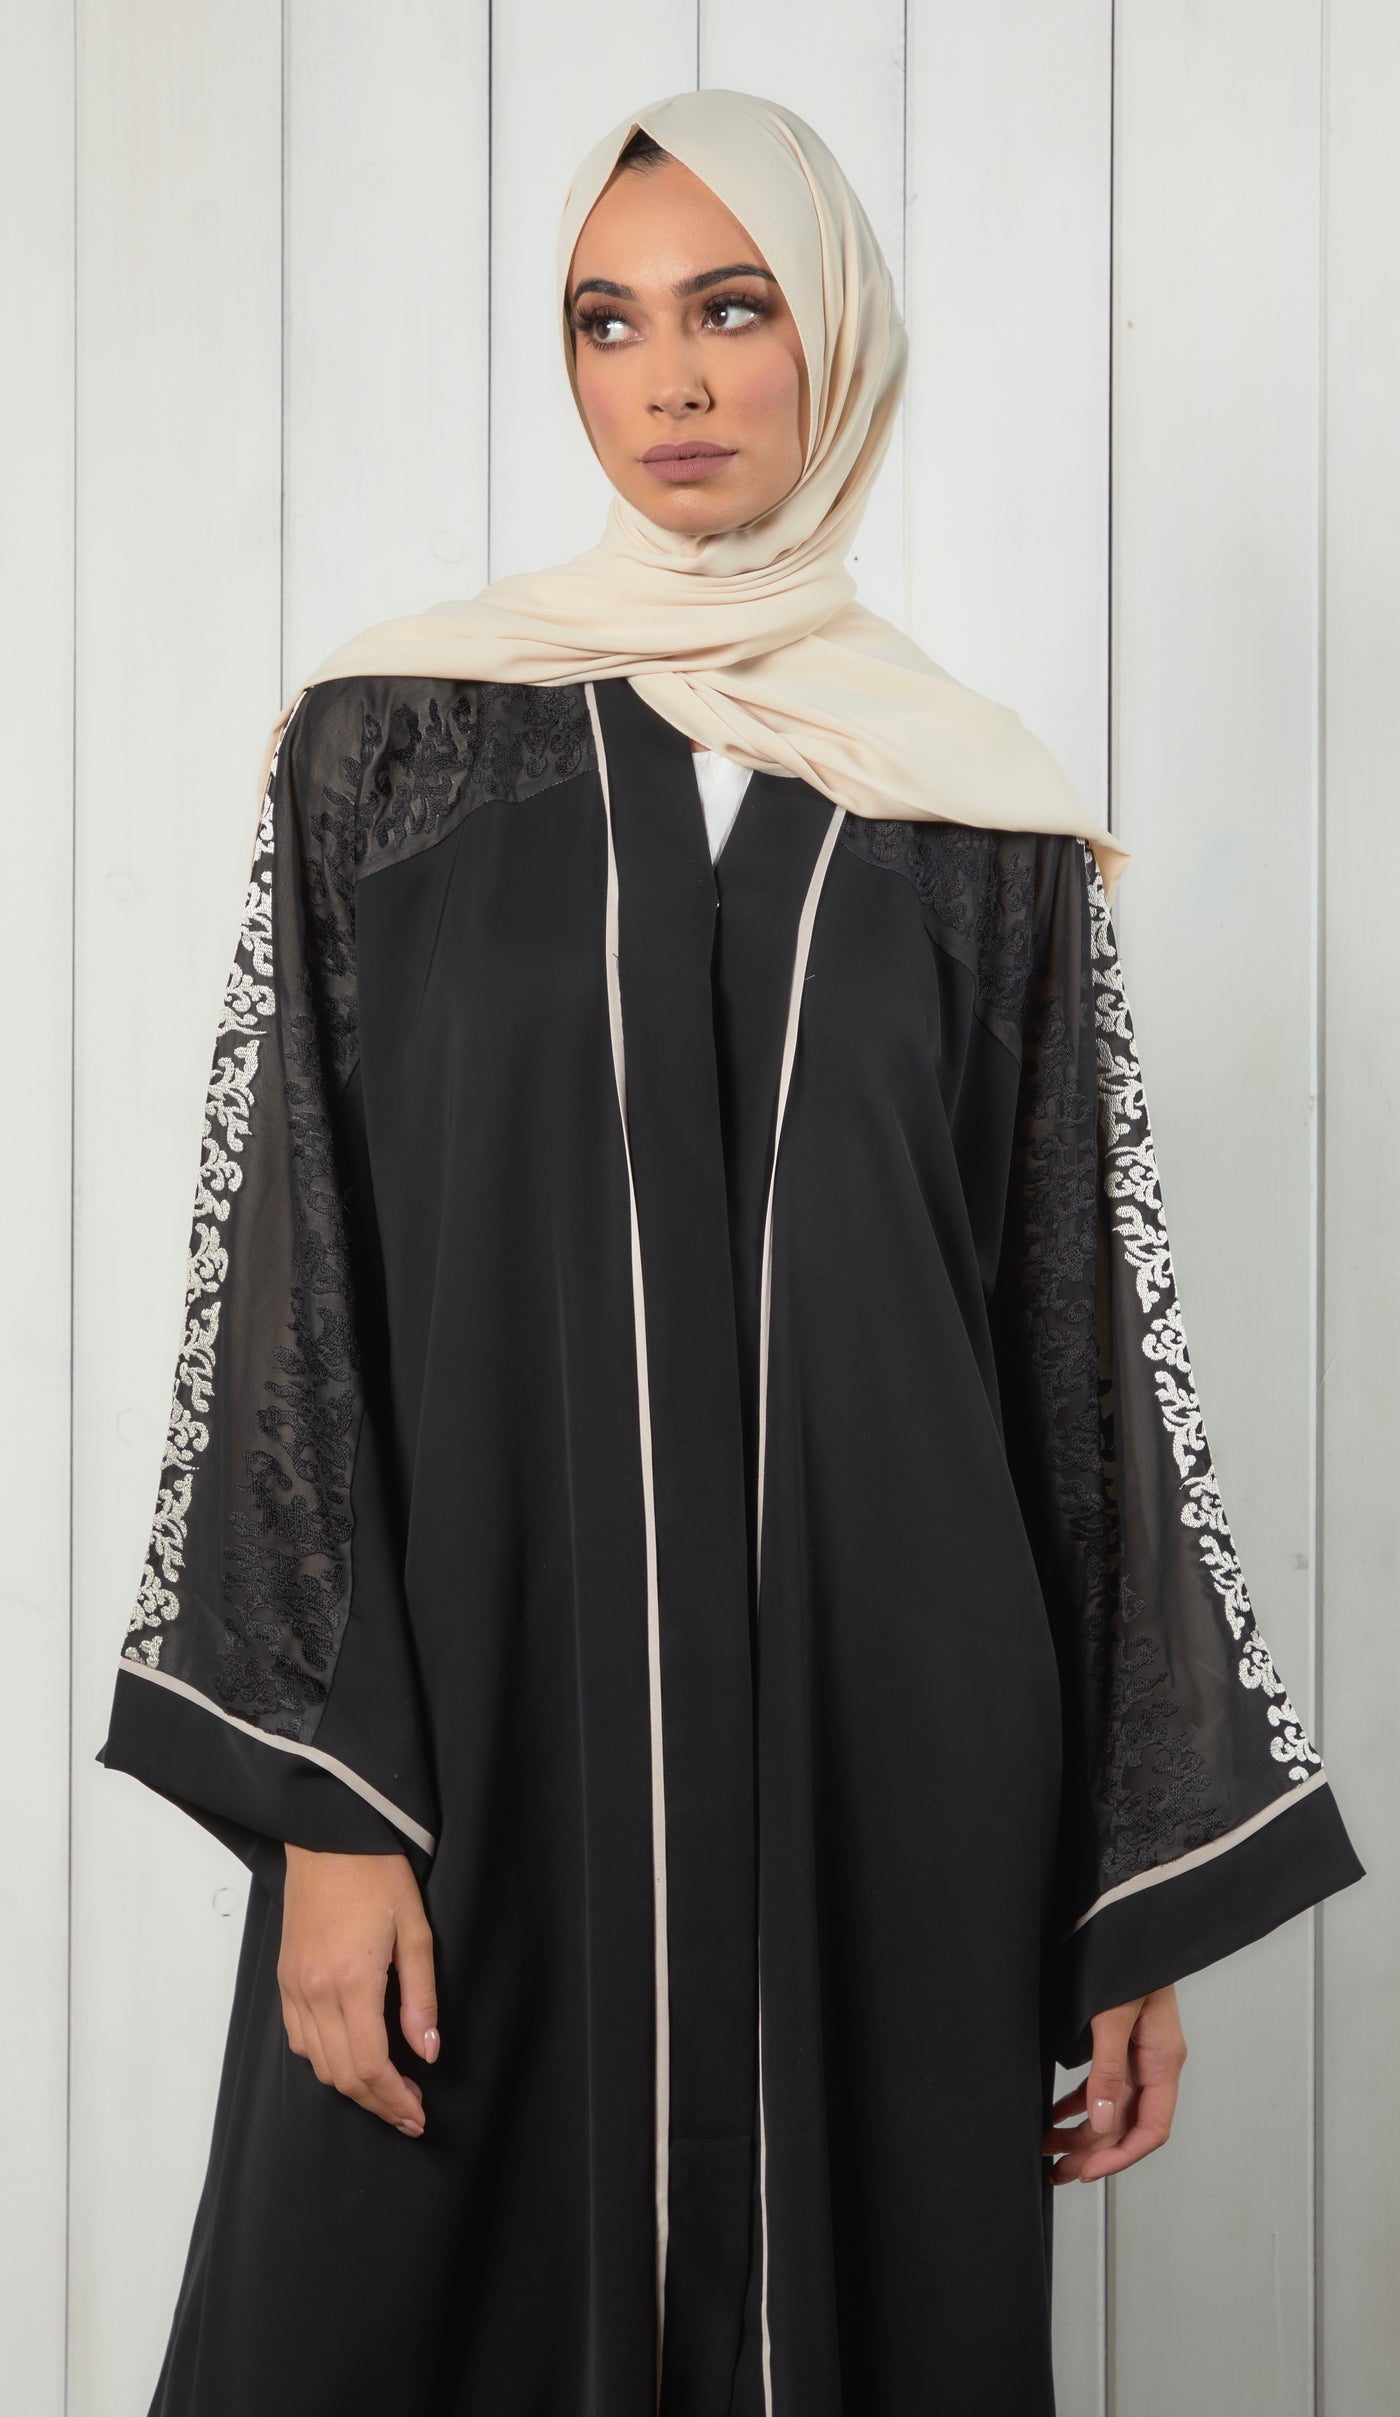 Reem Embroidered Abaya